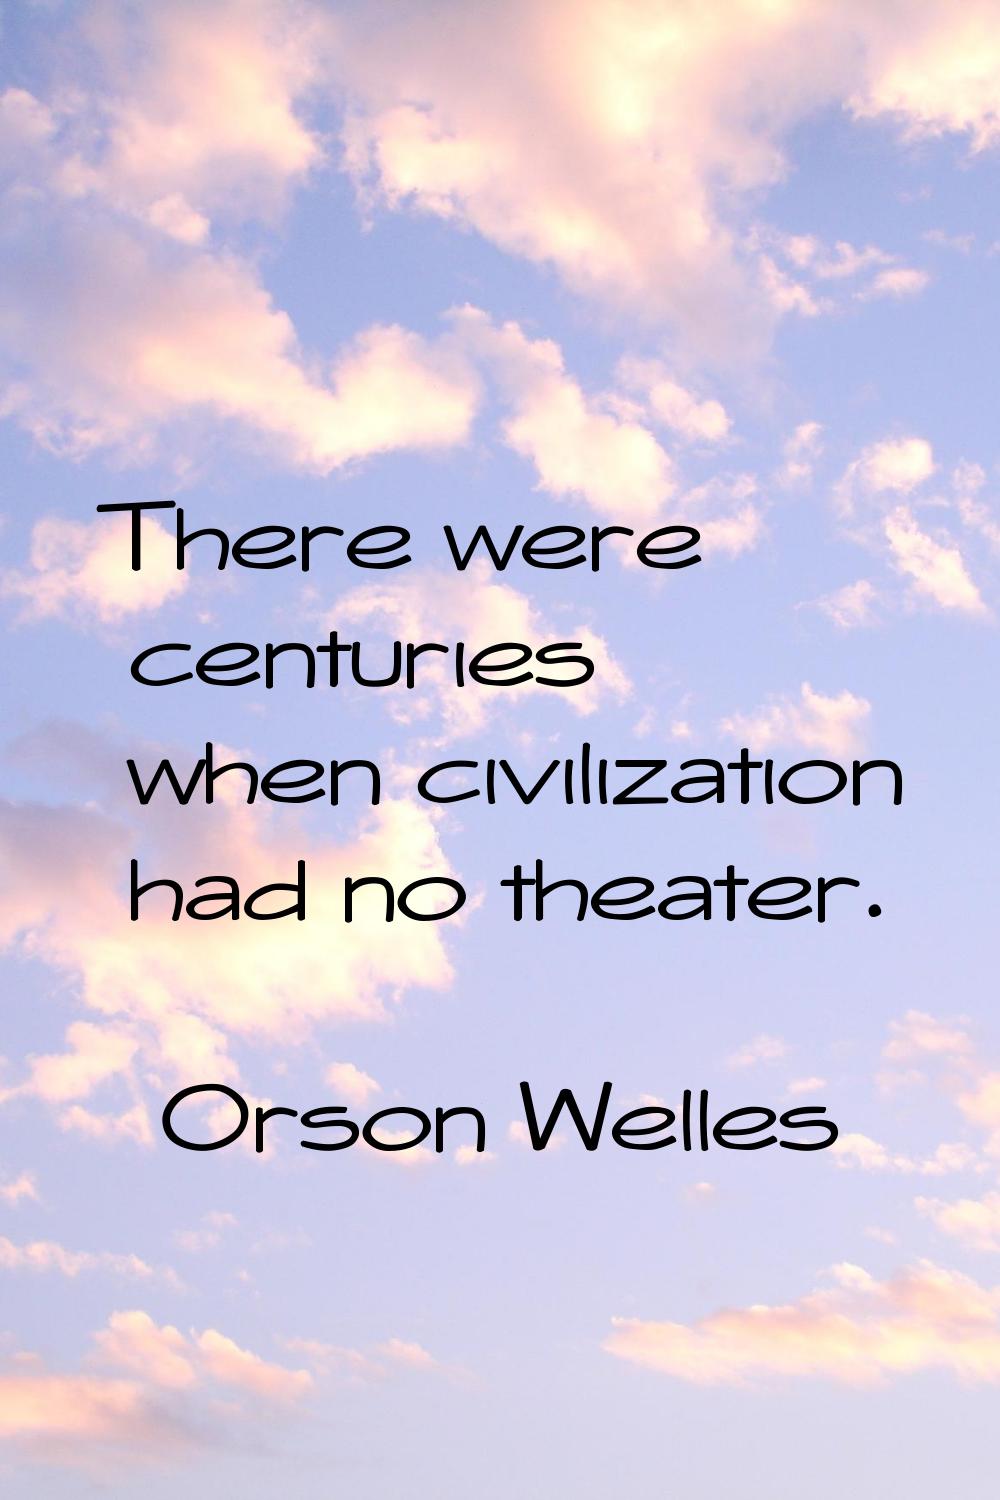 There were centuries when civilization had no theater.